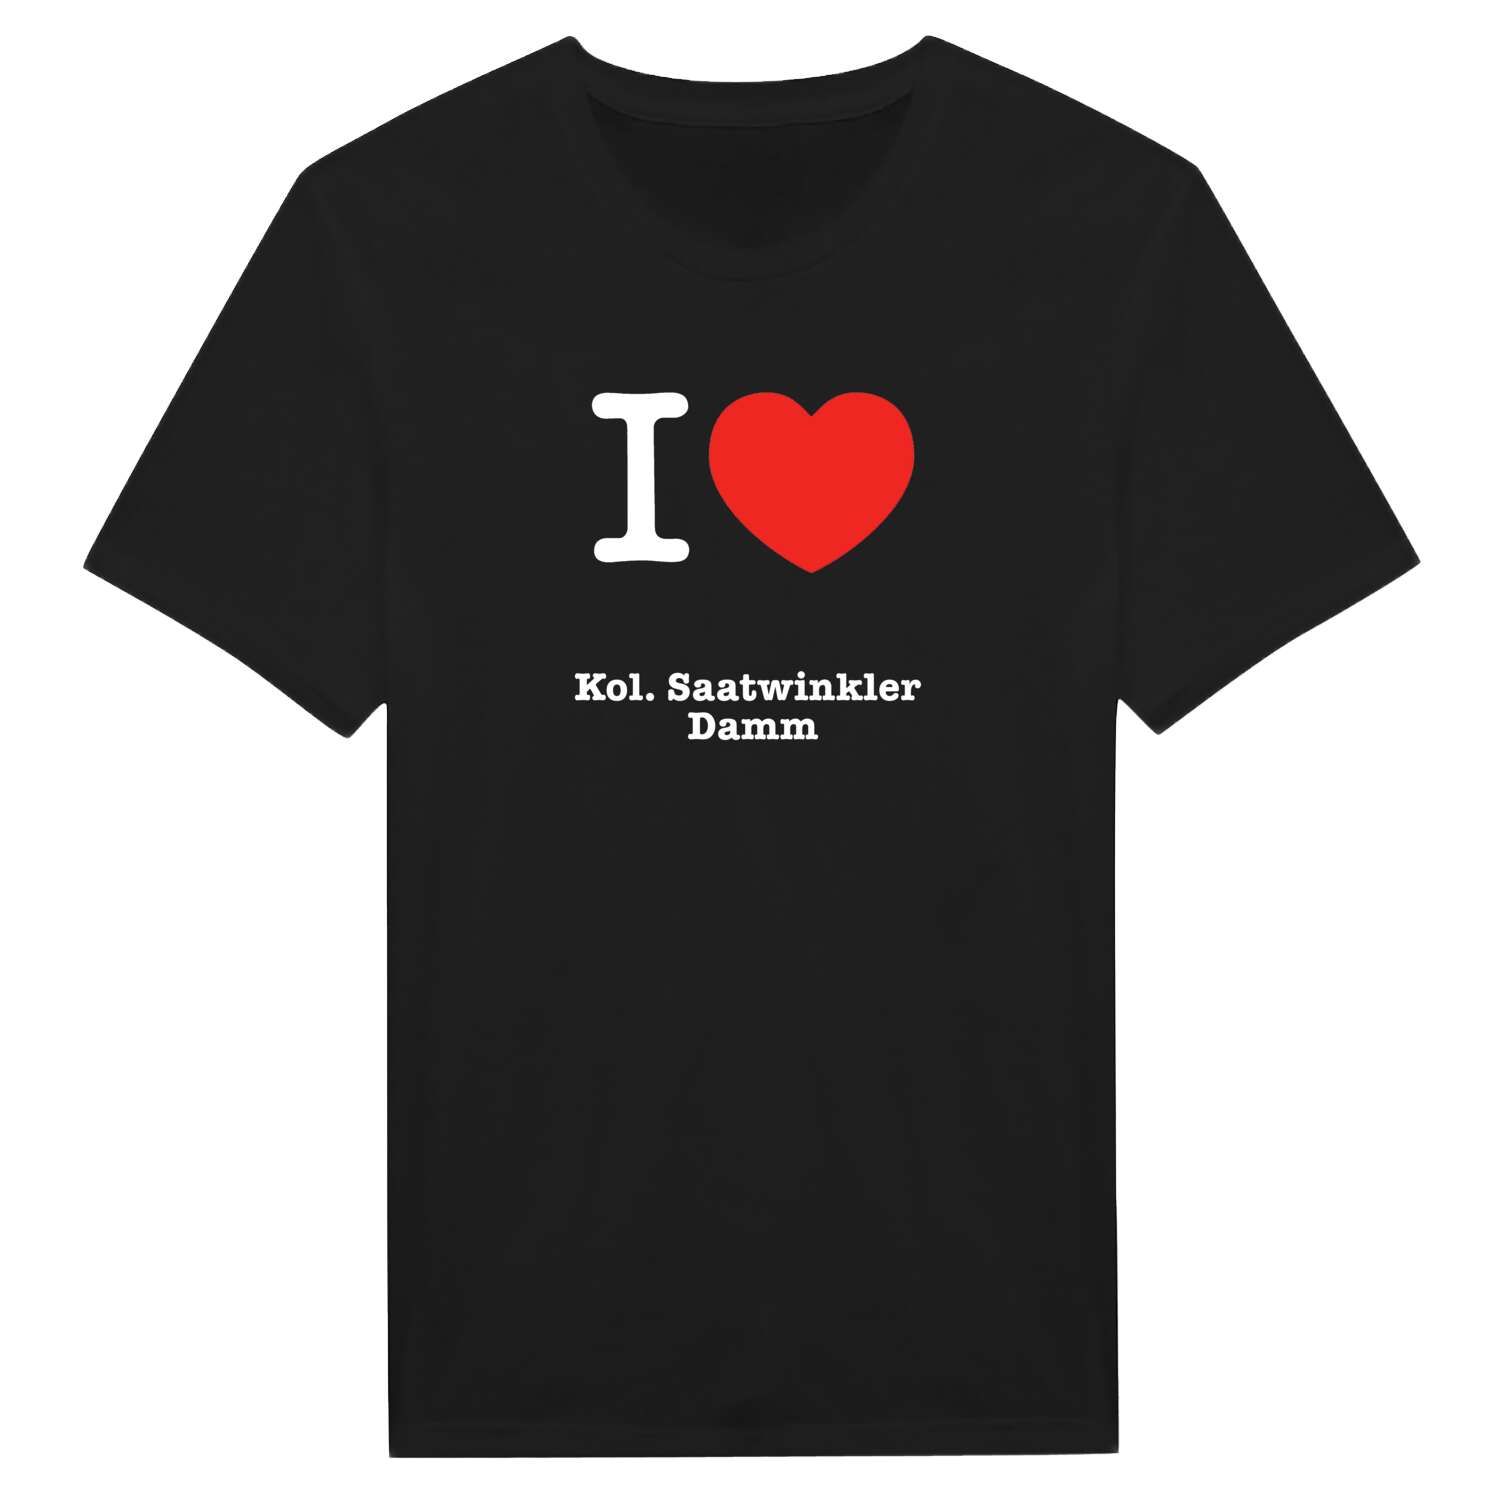 Kol. Saatwinkler Damm T-Shirt »I love«